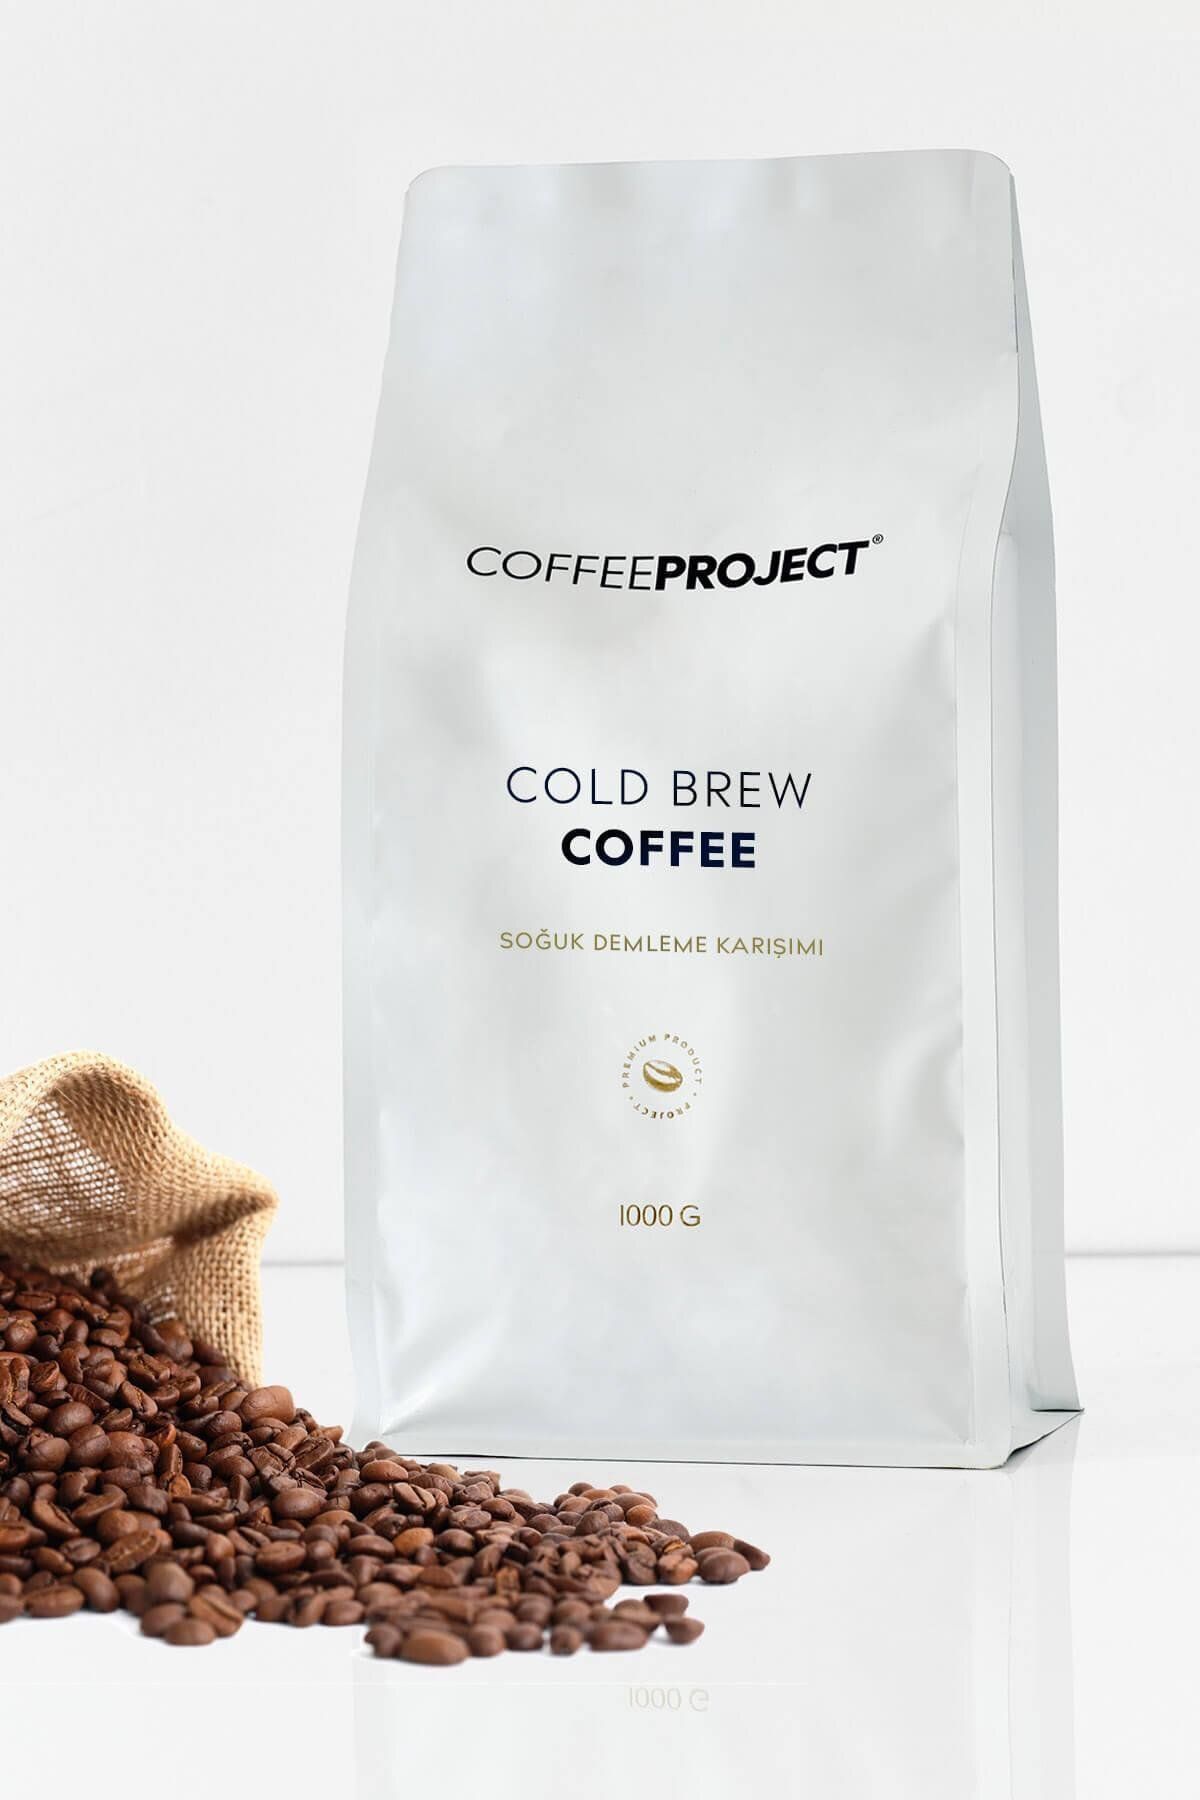 Coffee Project 1 Kg Cold Brew Coffee - Soğuk Demleme Kahvesi